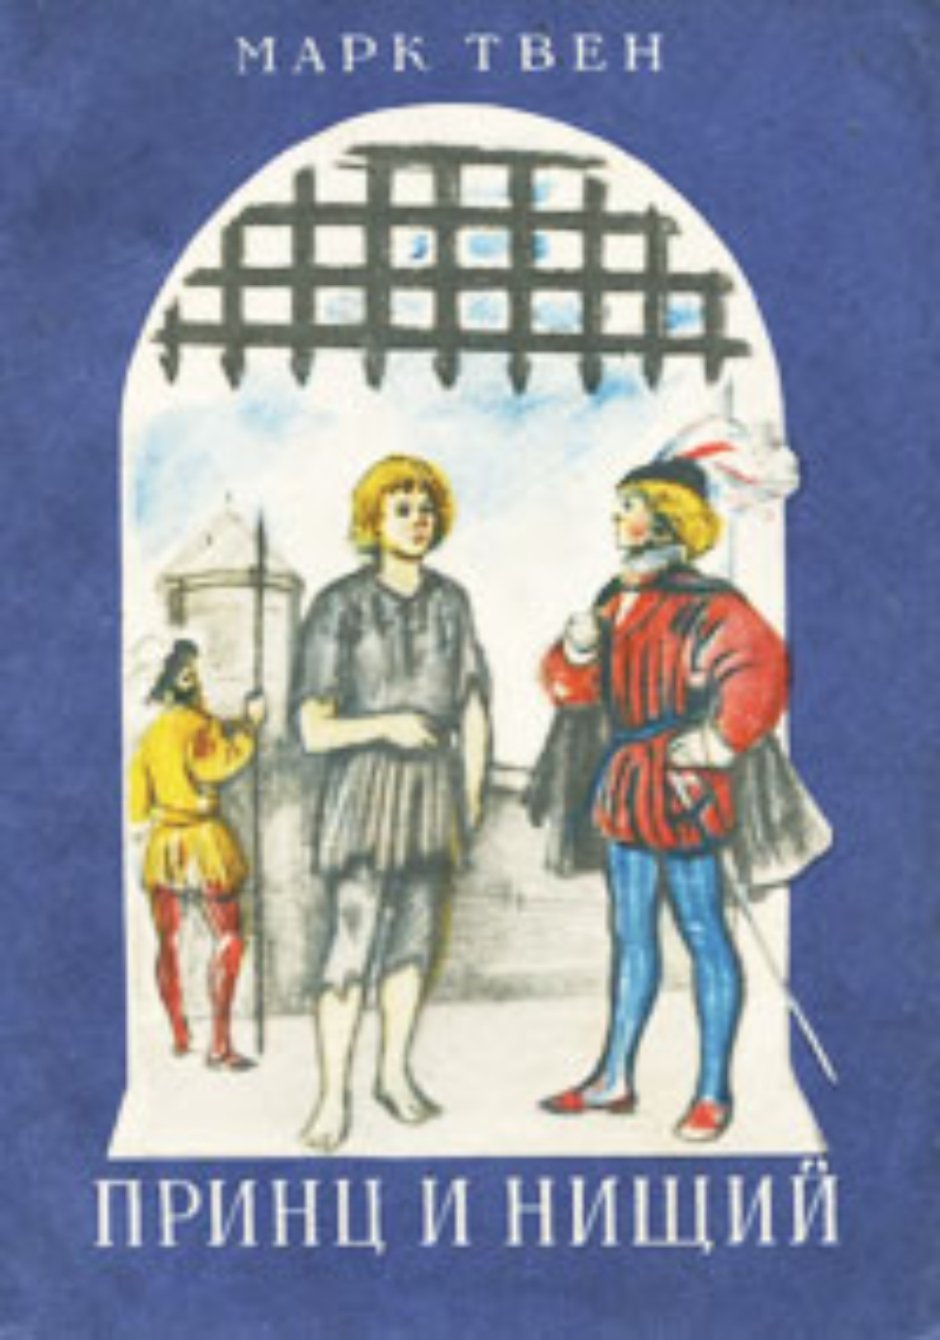 Книжка марка Твена принц и нищий